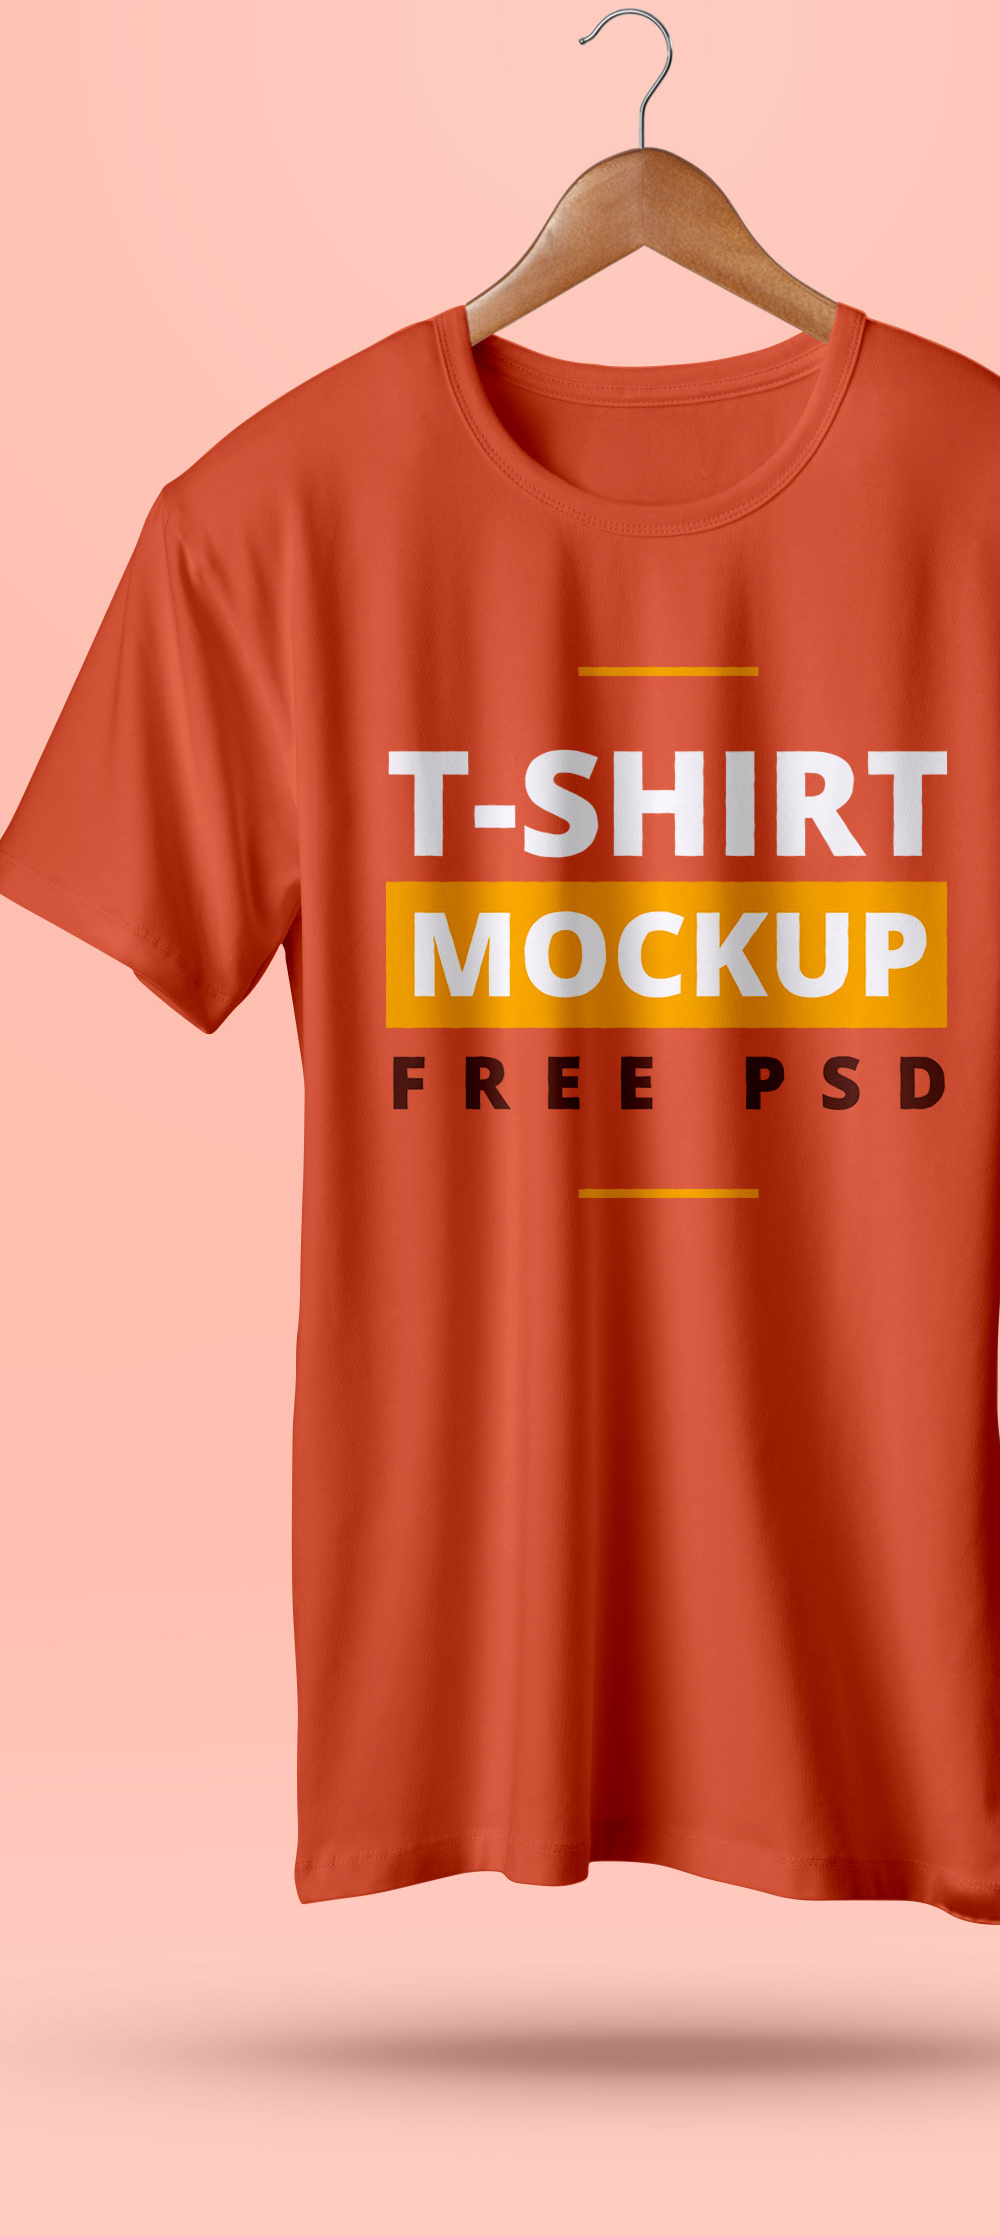 Free PSD T-Shirt Mockup-2